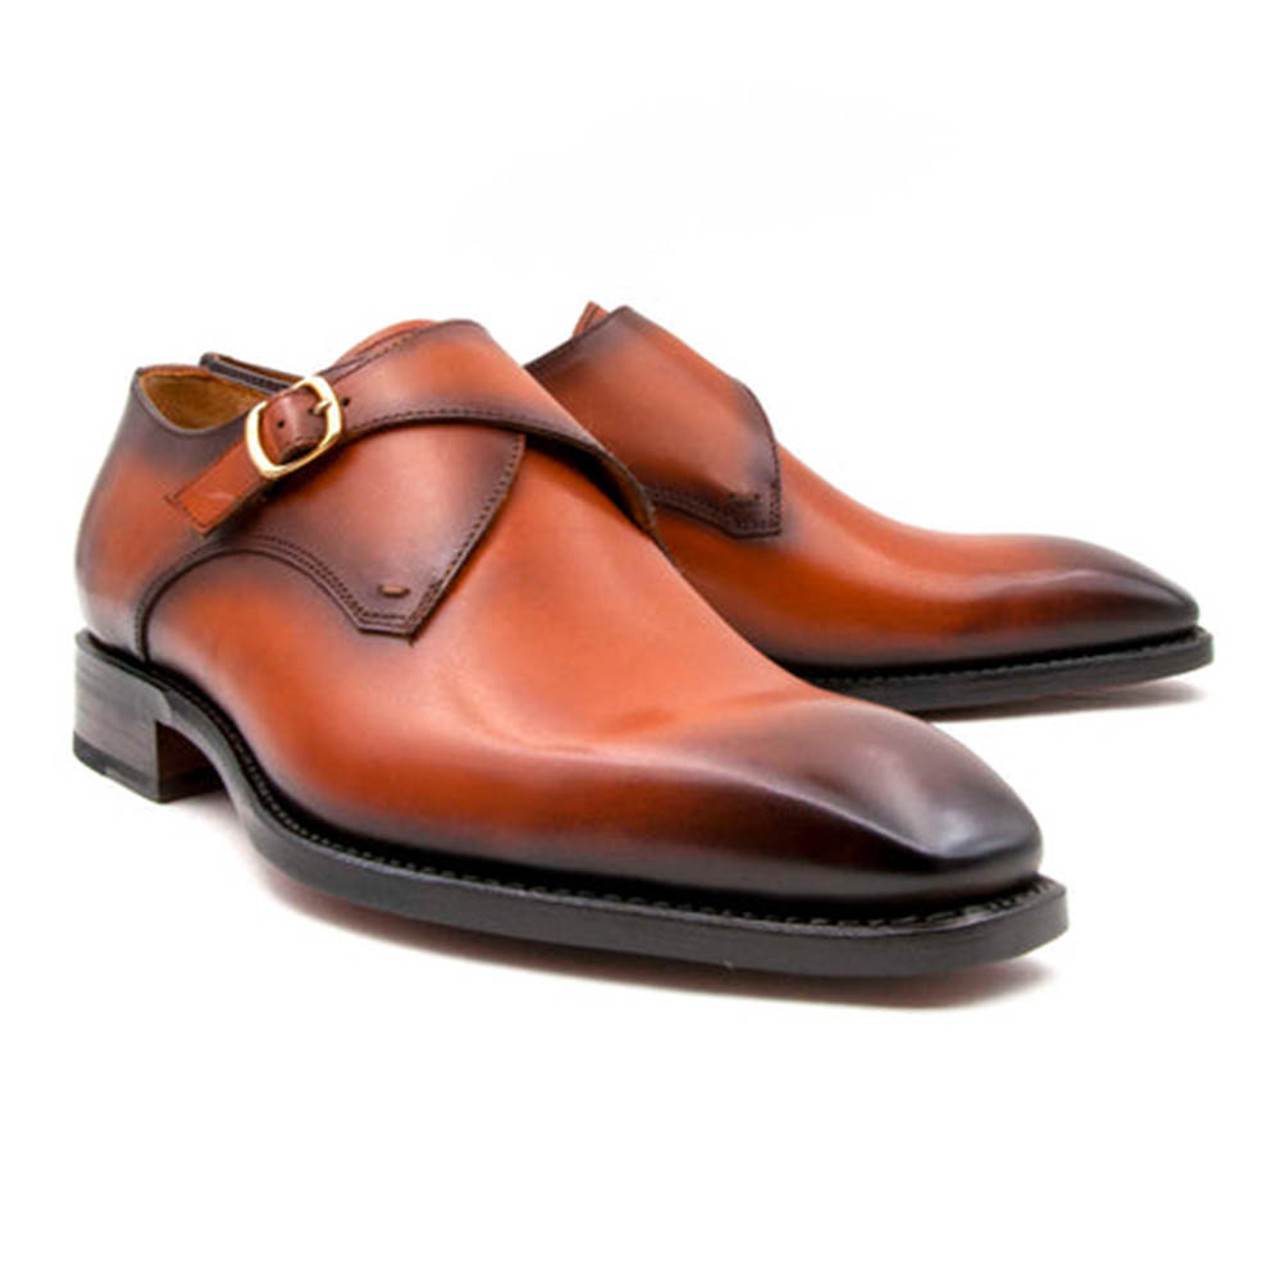 UGo Vasare Edward Sr. Monk Strap Men’s Shoes - Hand-Painted Exclusive ...